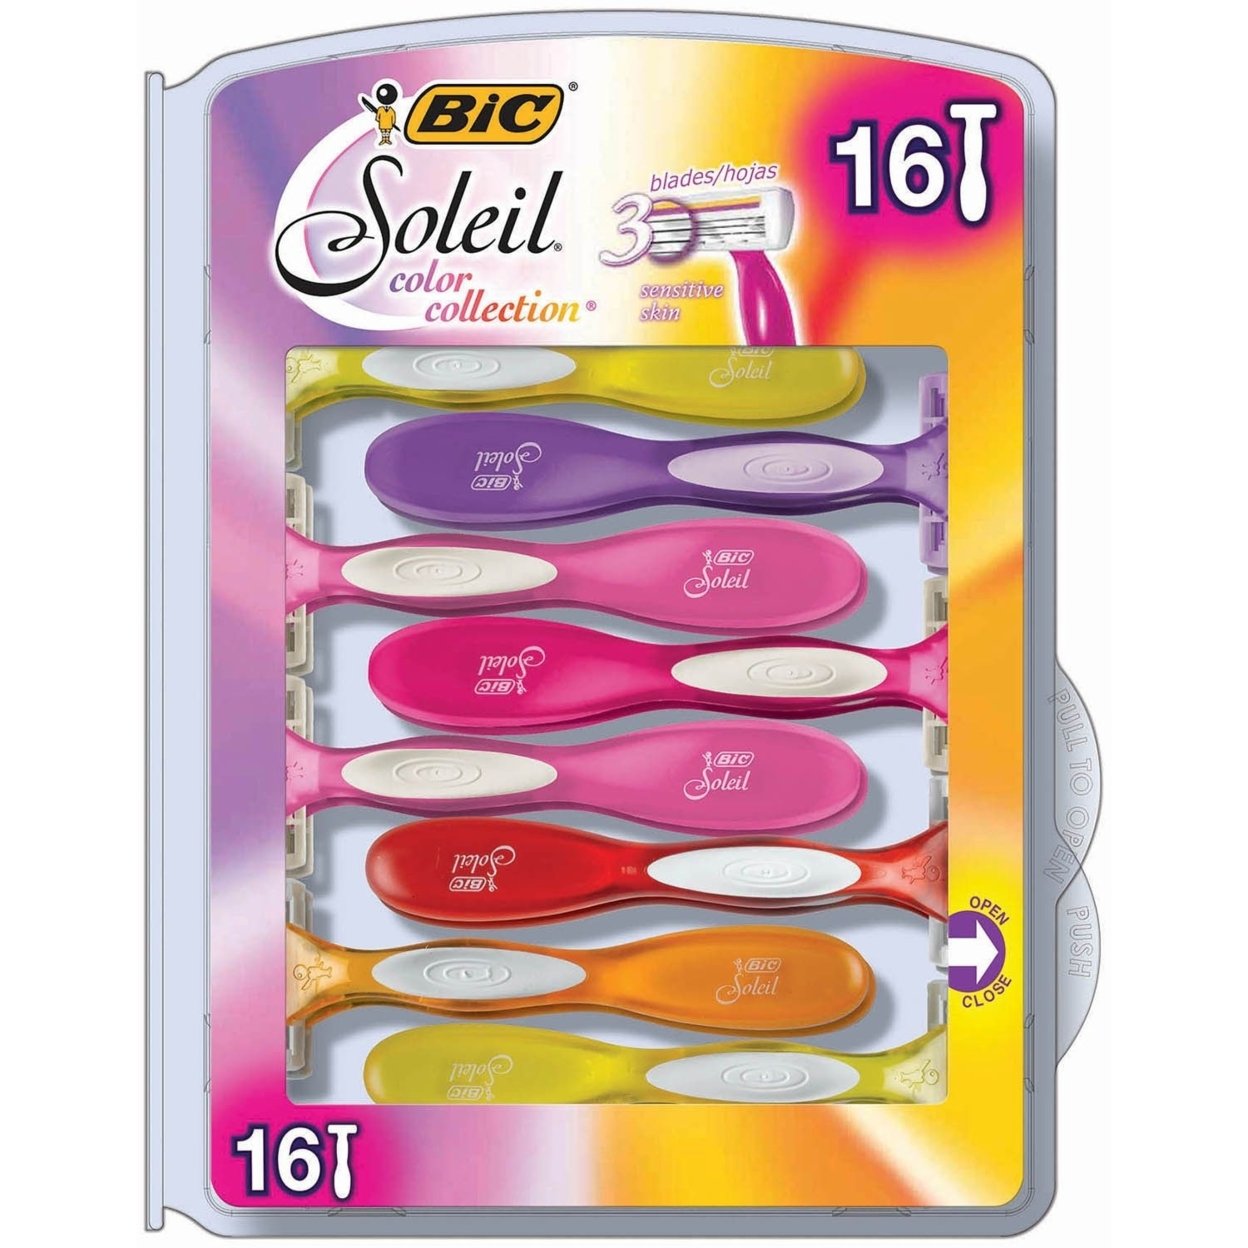 BIC Soleil Color Collection Razors (16 Count)